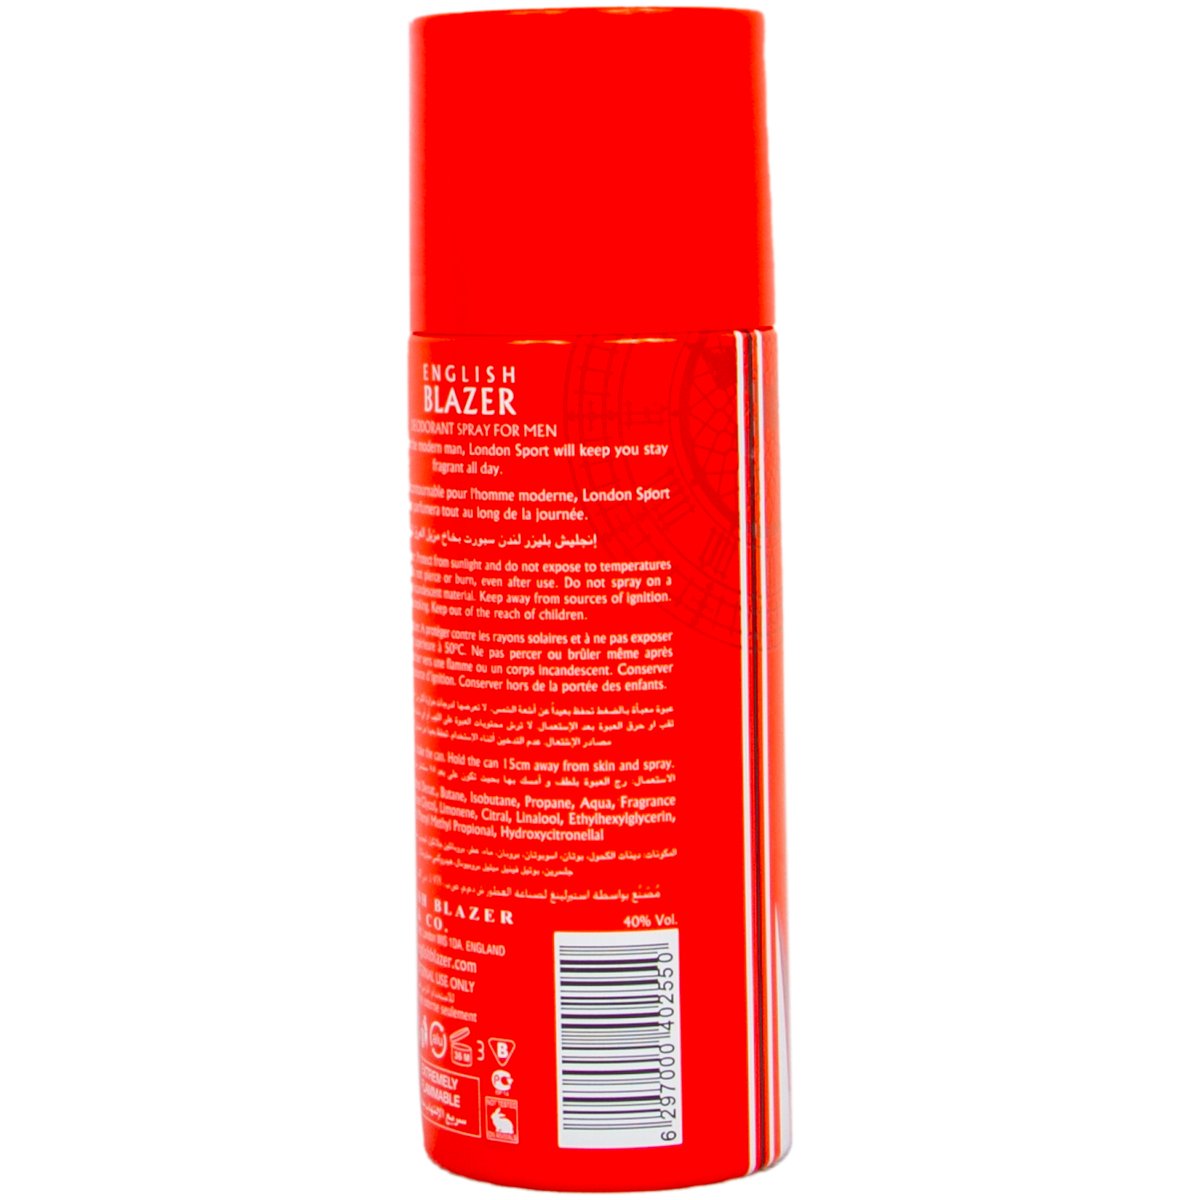 English Blazer London Sport Deodorant Spray For Men 150ml